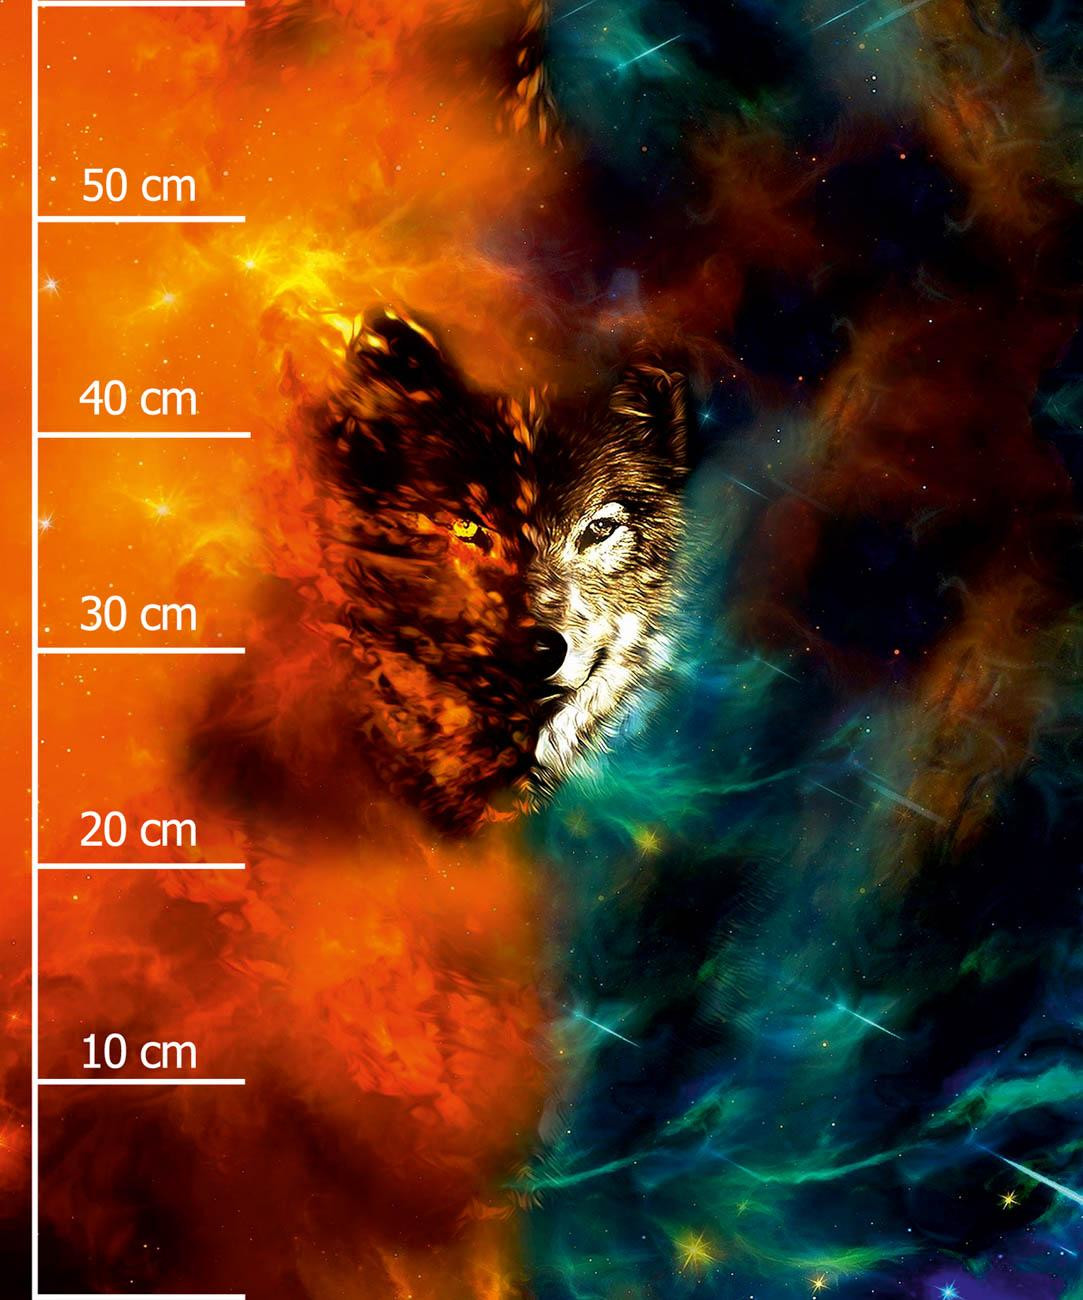 VLK / galaxie - panel (60cm x 50cm) SINGLE JERSEY ITY